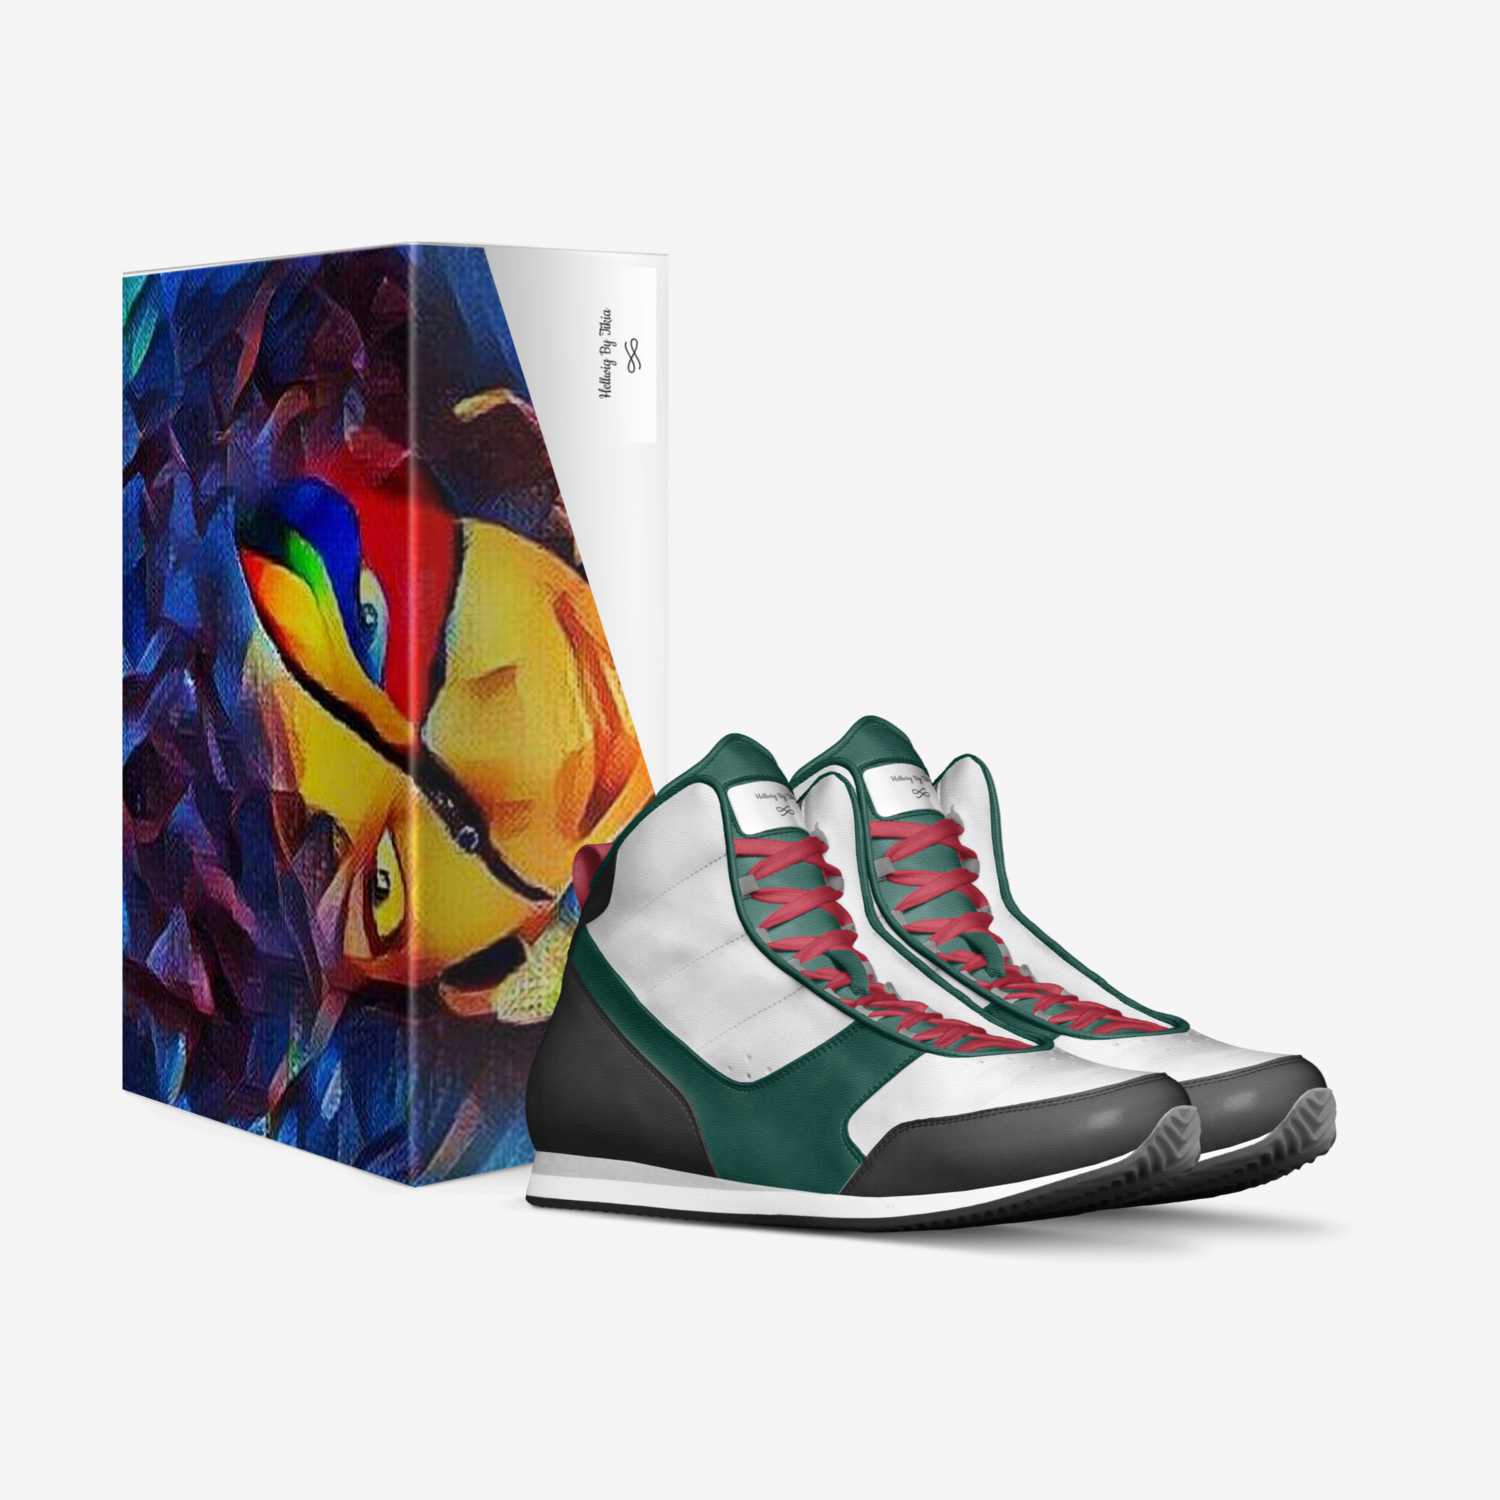 Nidais custom made in Italy shoes by Hellwig By Tikia LLC | Box view